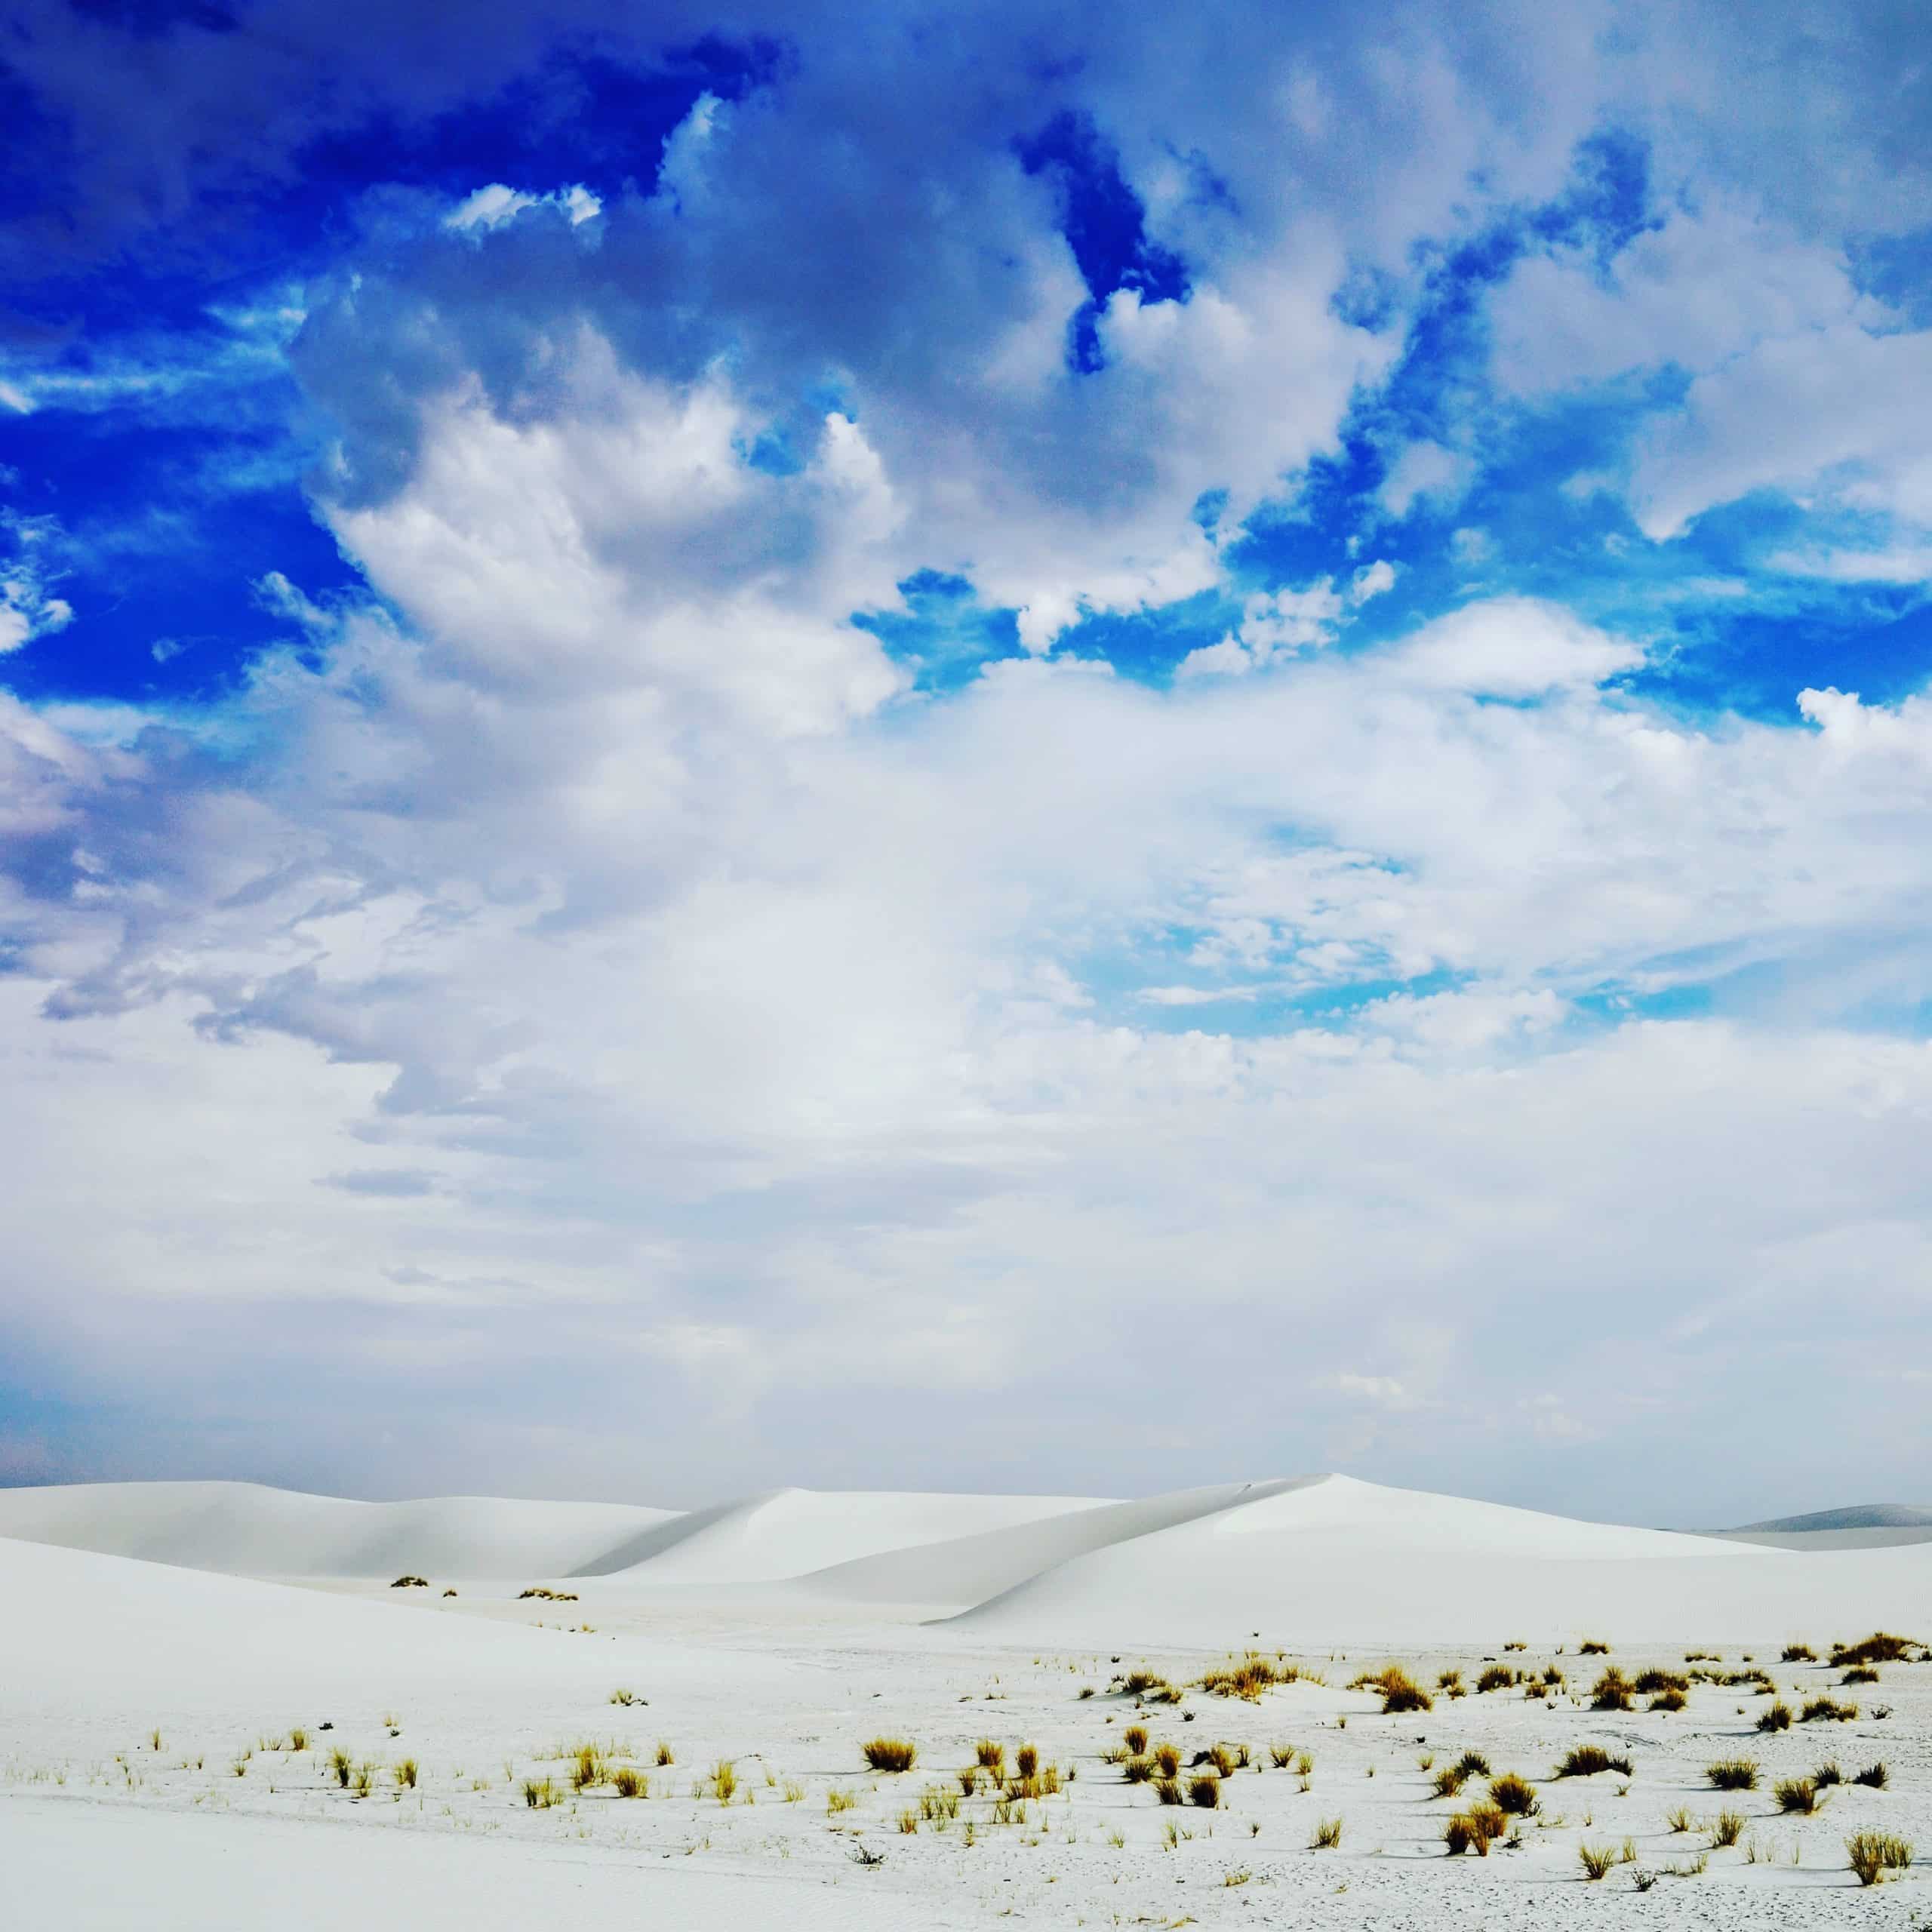 Dunes of sand at White Sands National Park